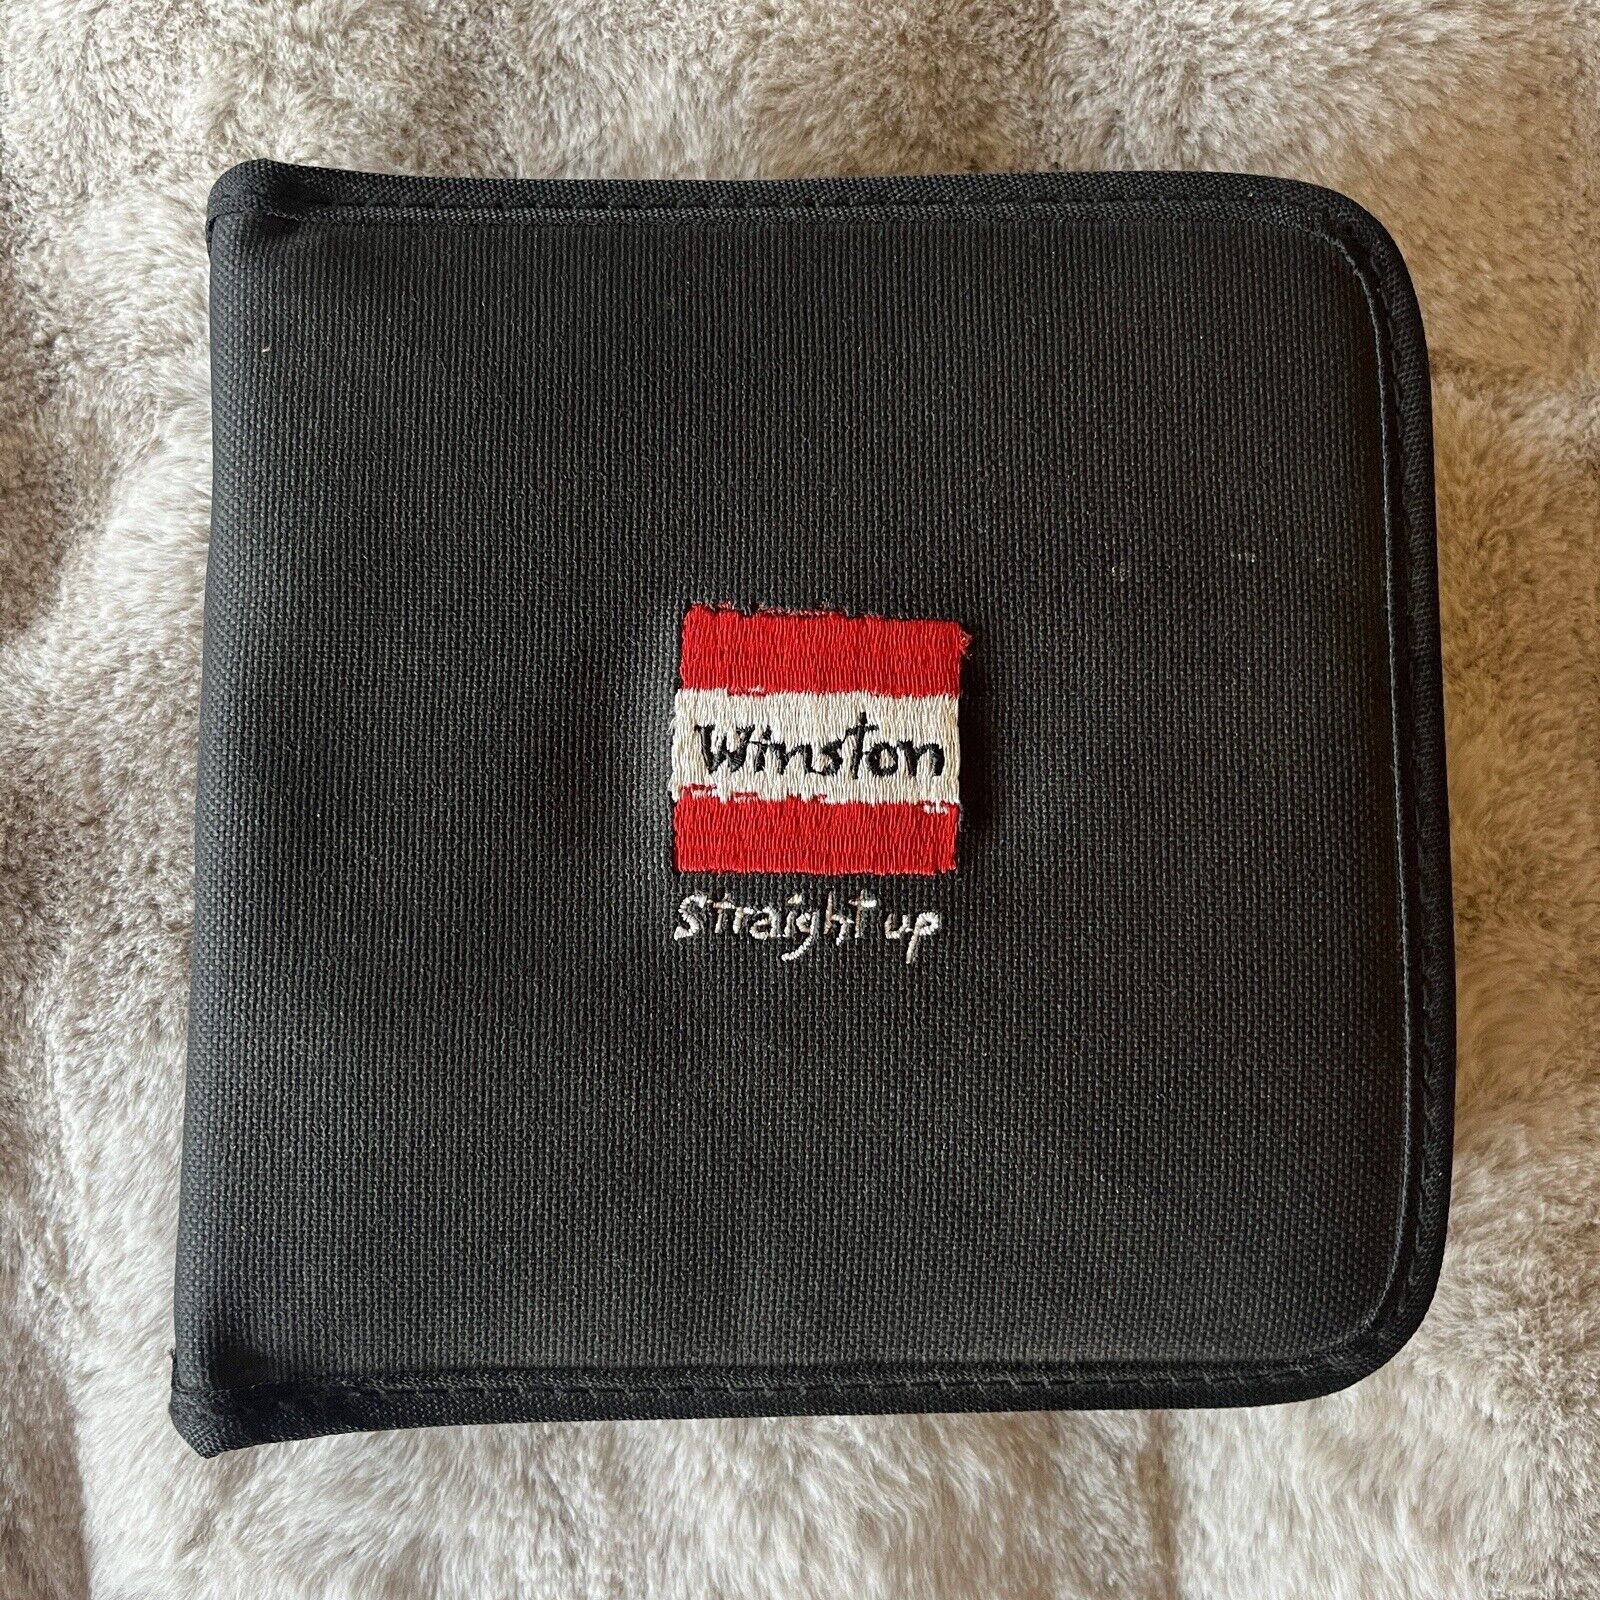 Vintage Winston Cigarette Embroidered Travel CD Holder Case with Inserts